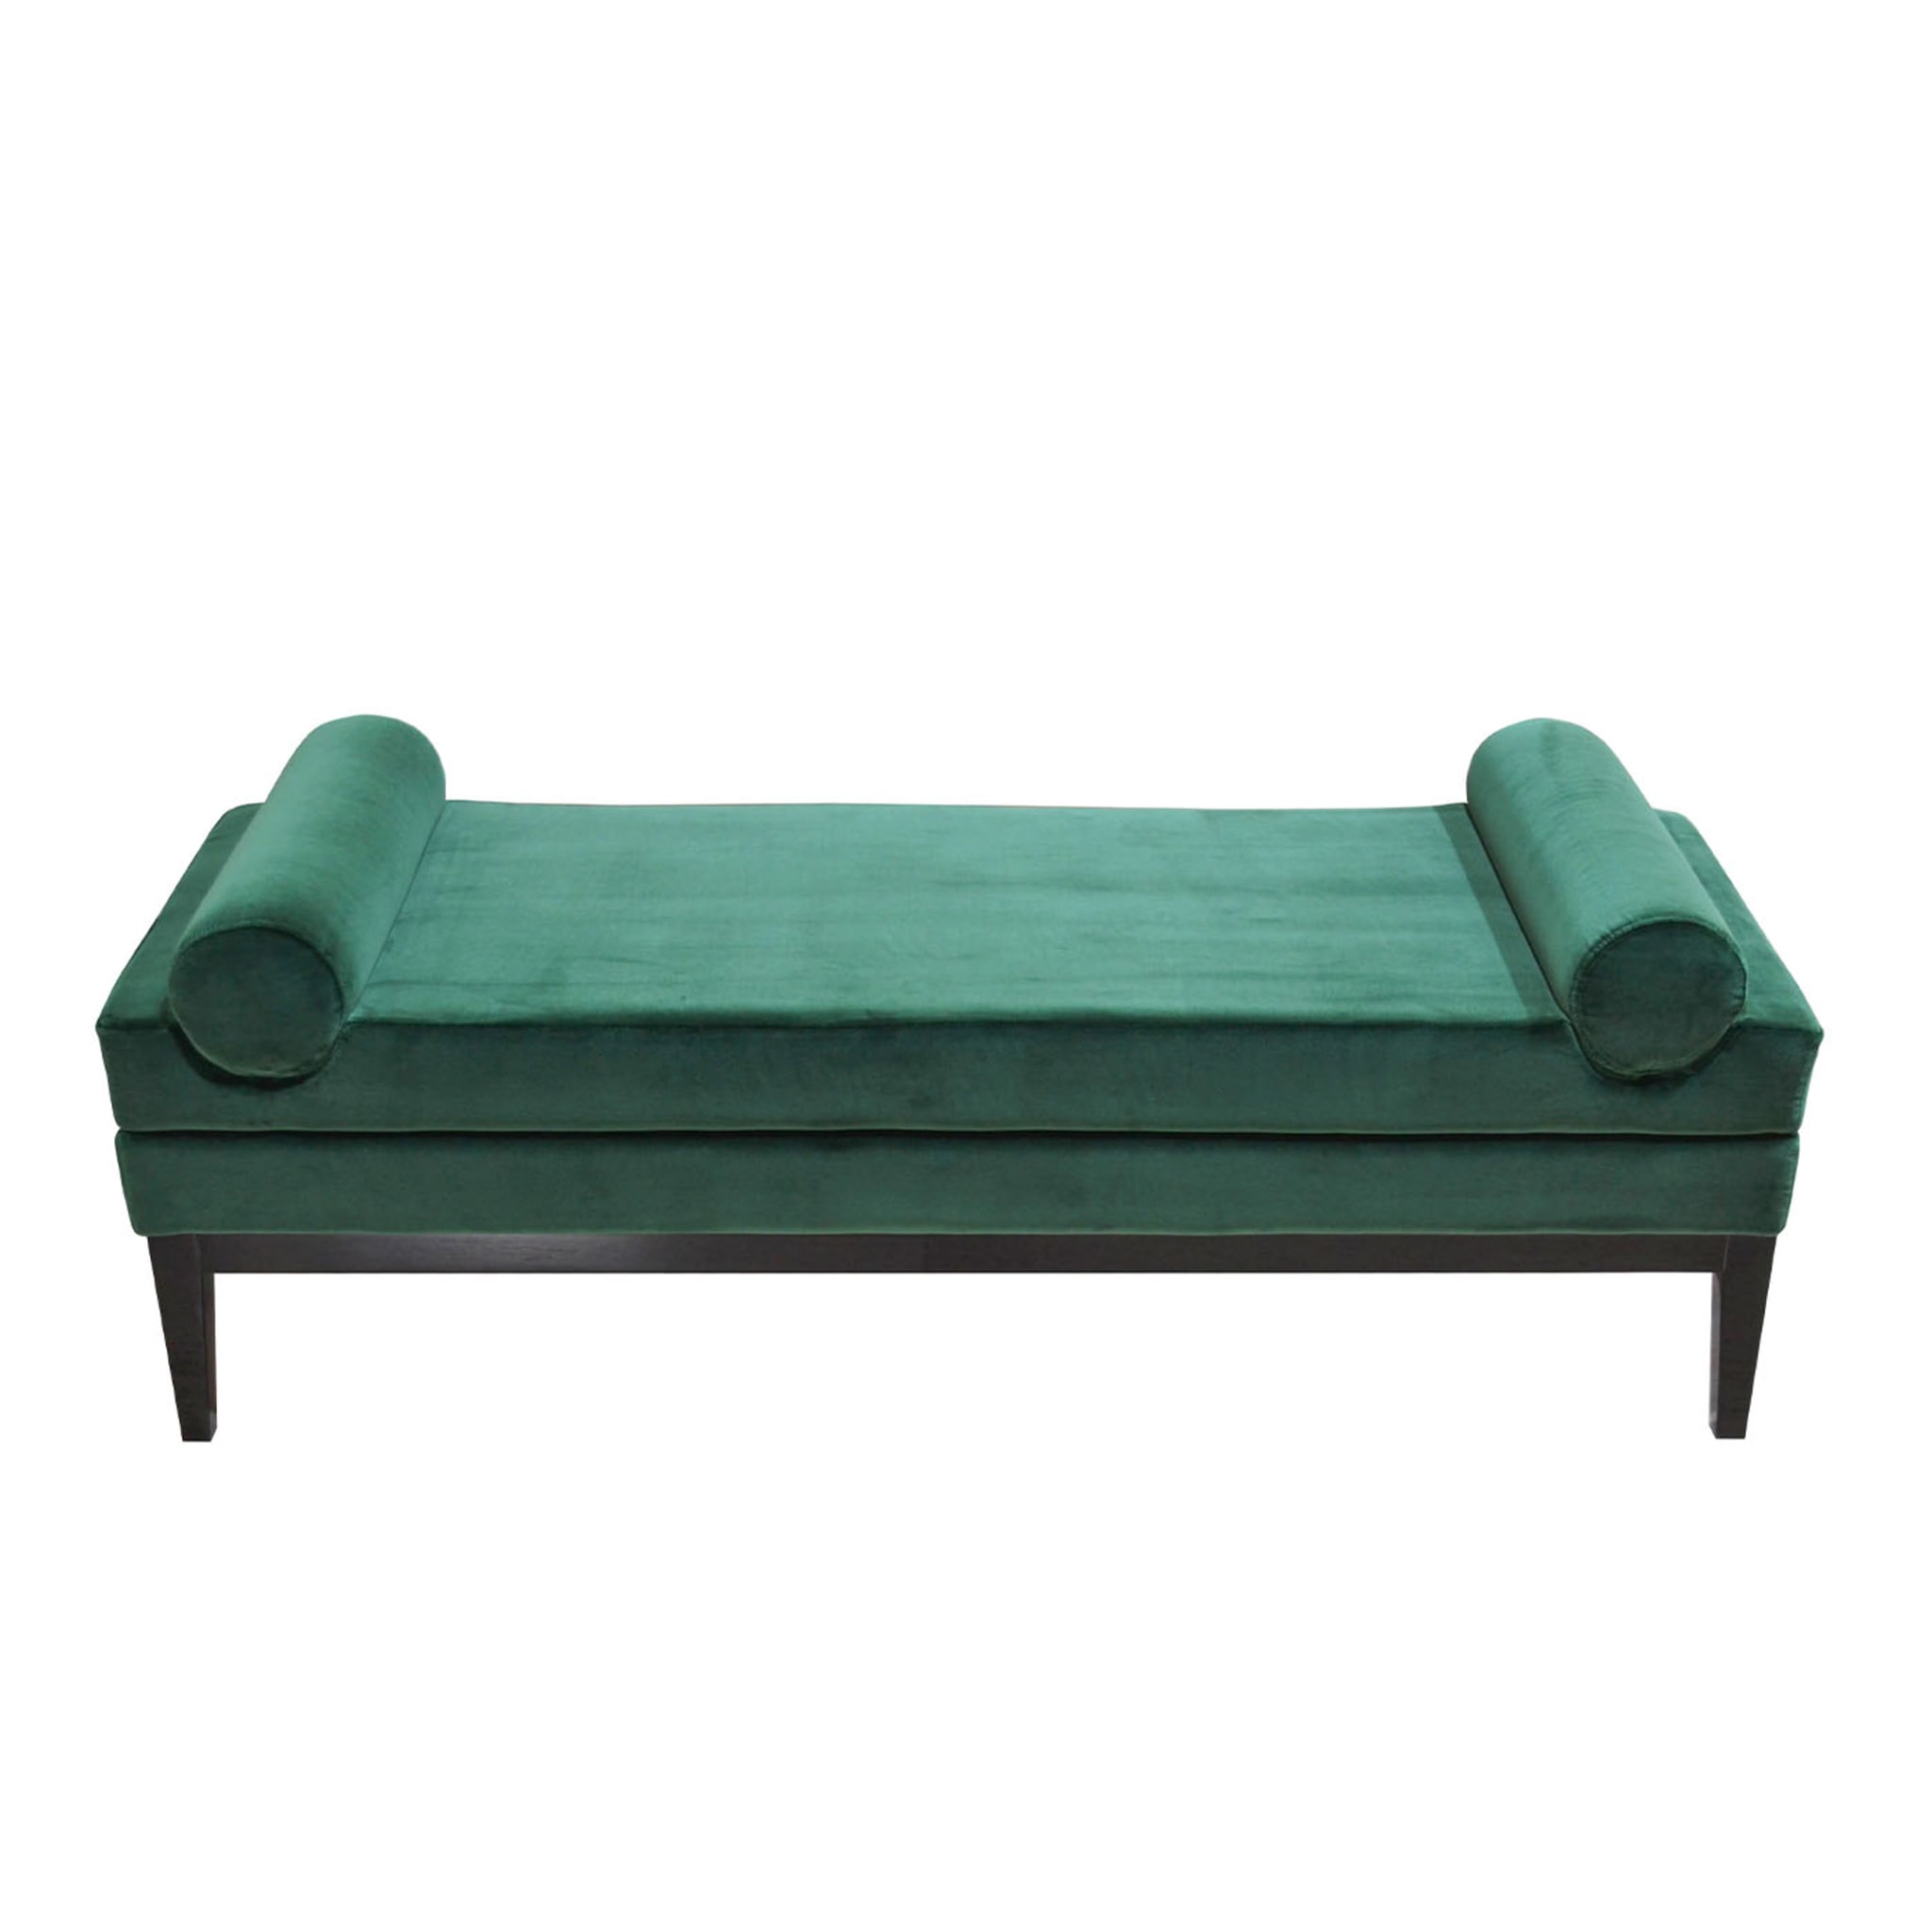 Italian Contemporary Upholstered Bench in Green Velvet Fabric - Alternative view 1